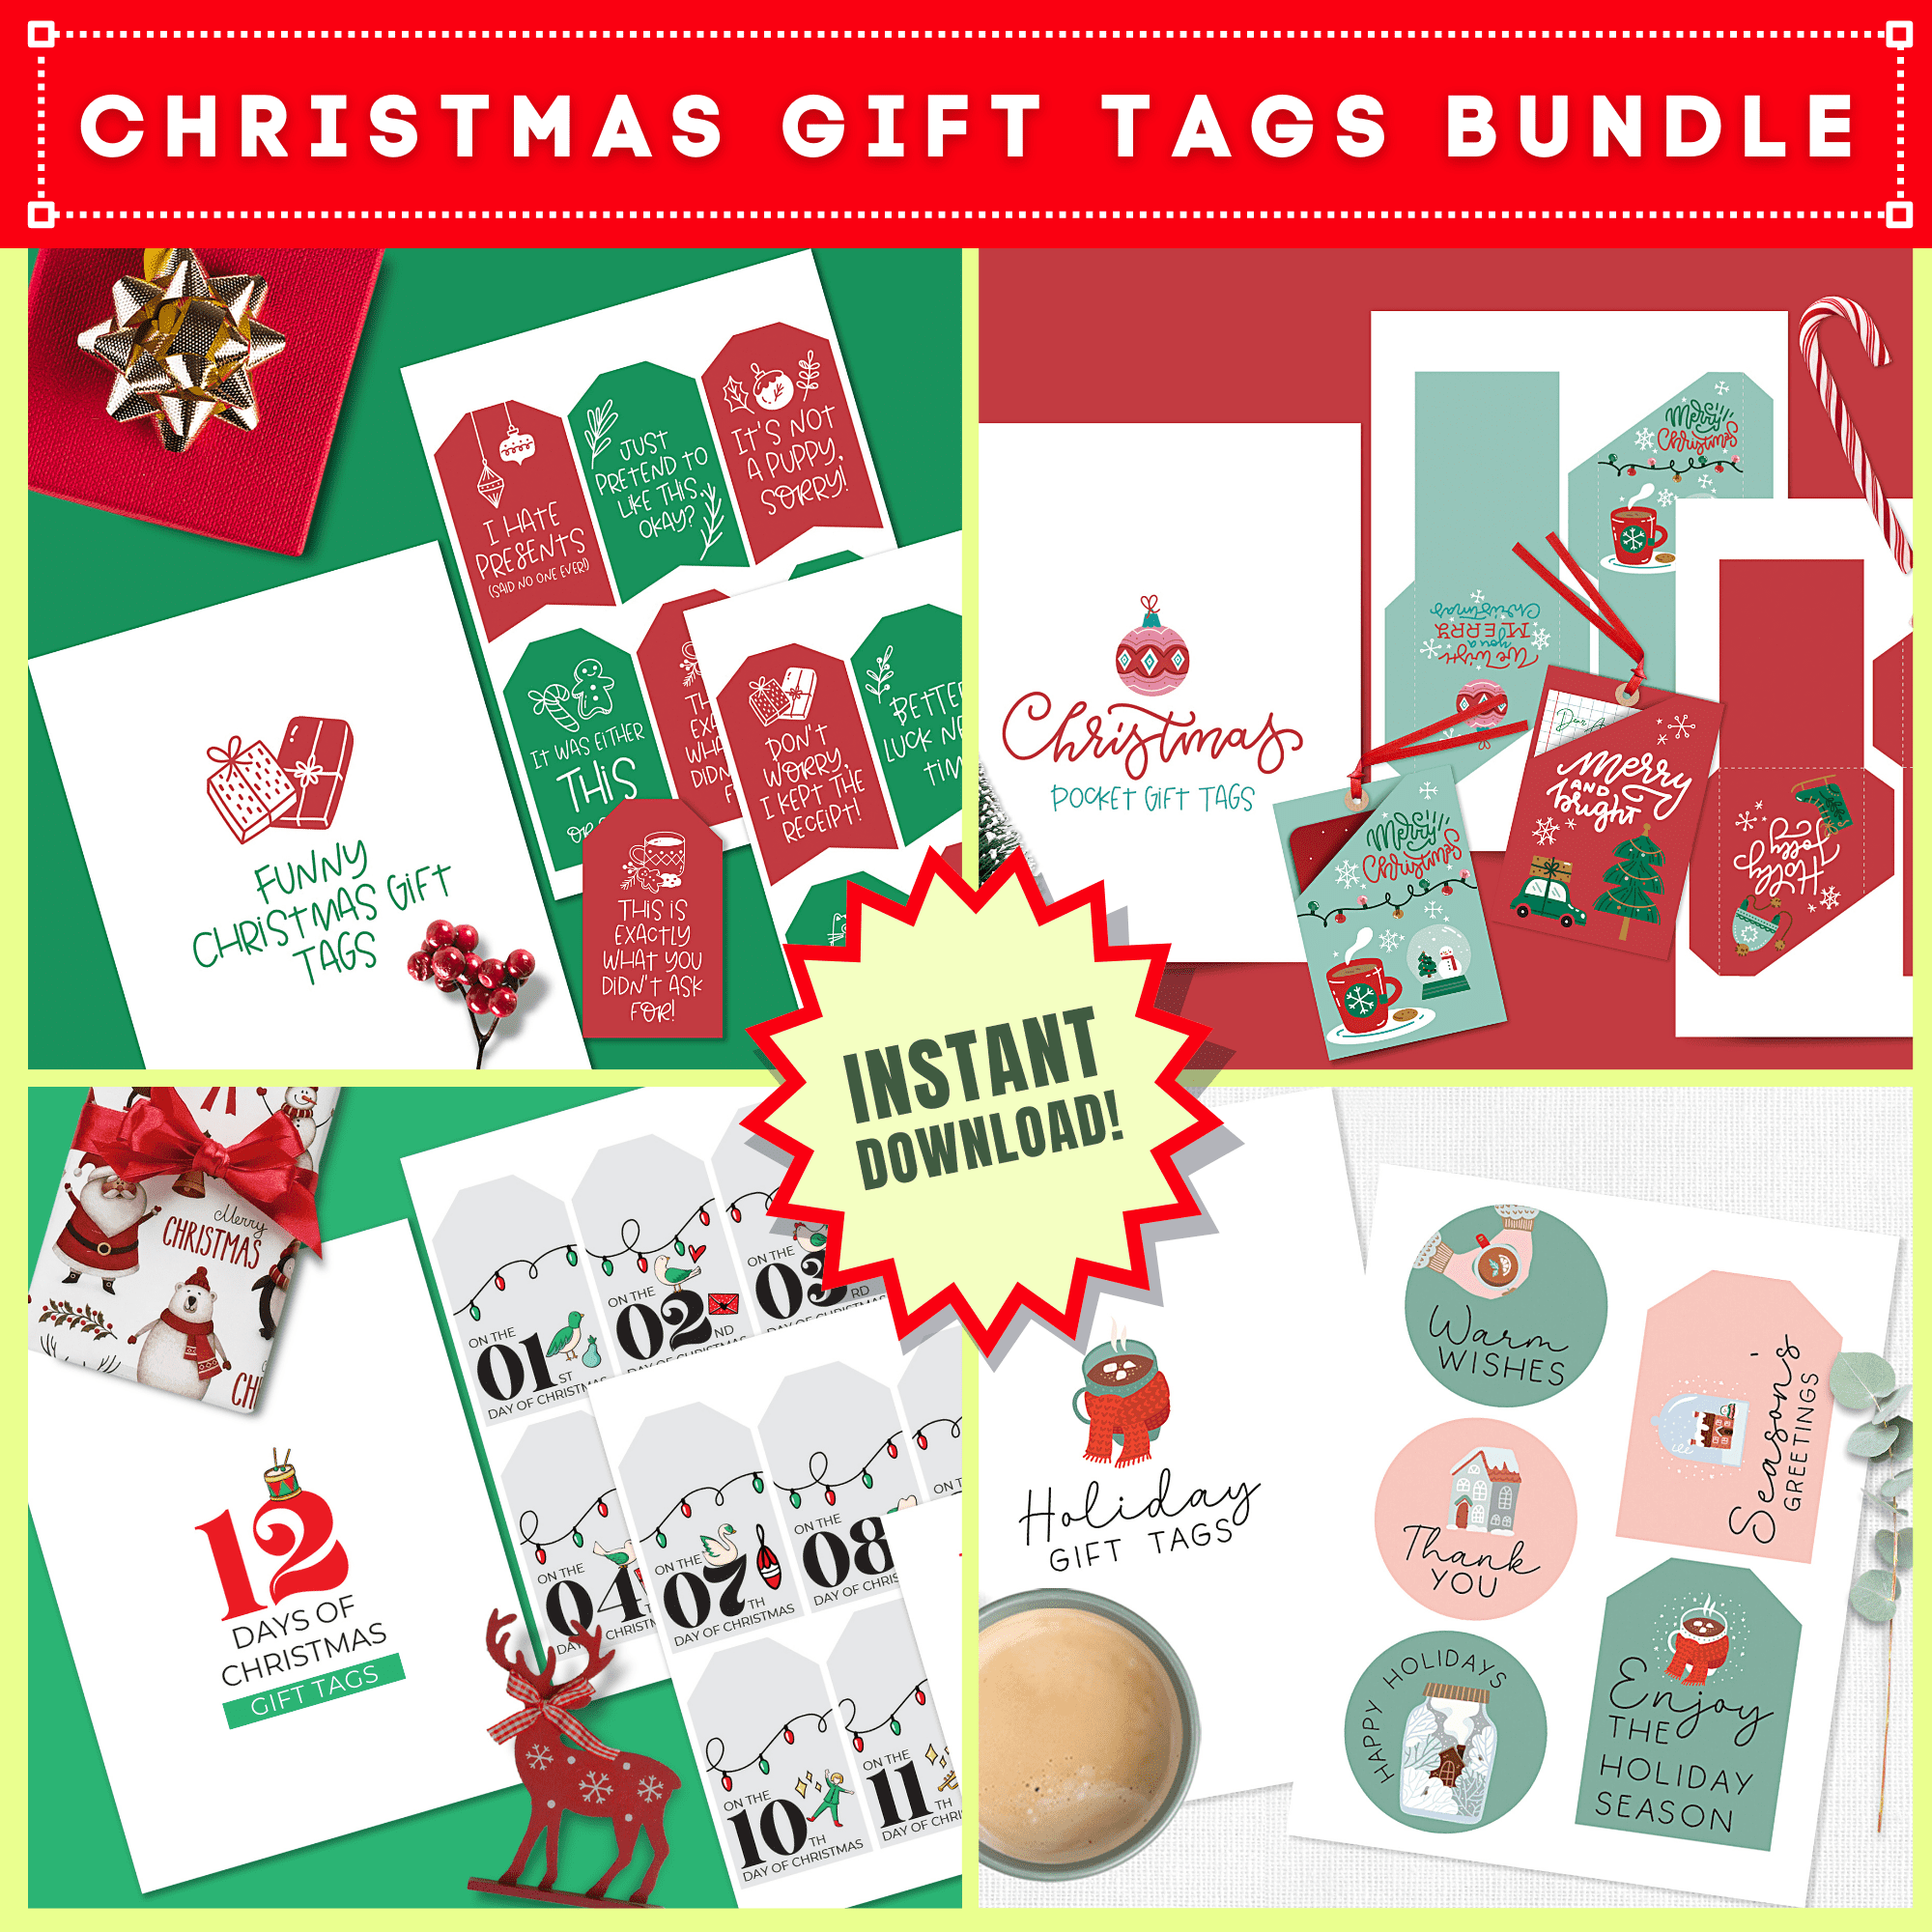 https://singlegirlsdiy.com/wp-content/uploads/2022/11/Printable-Christmas-Gift-Tags-Bundle-Collage.png